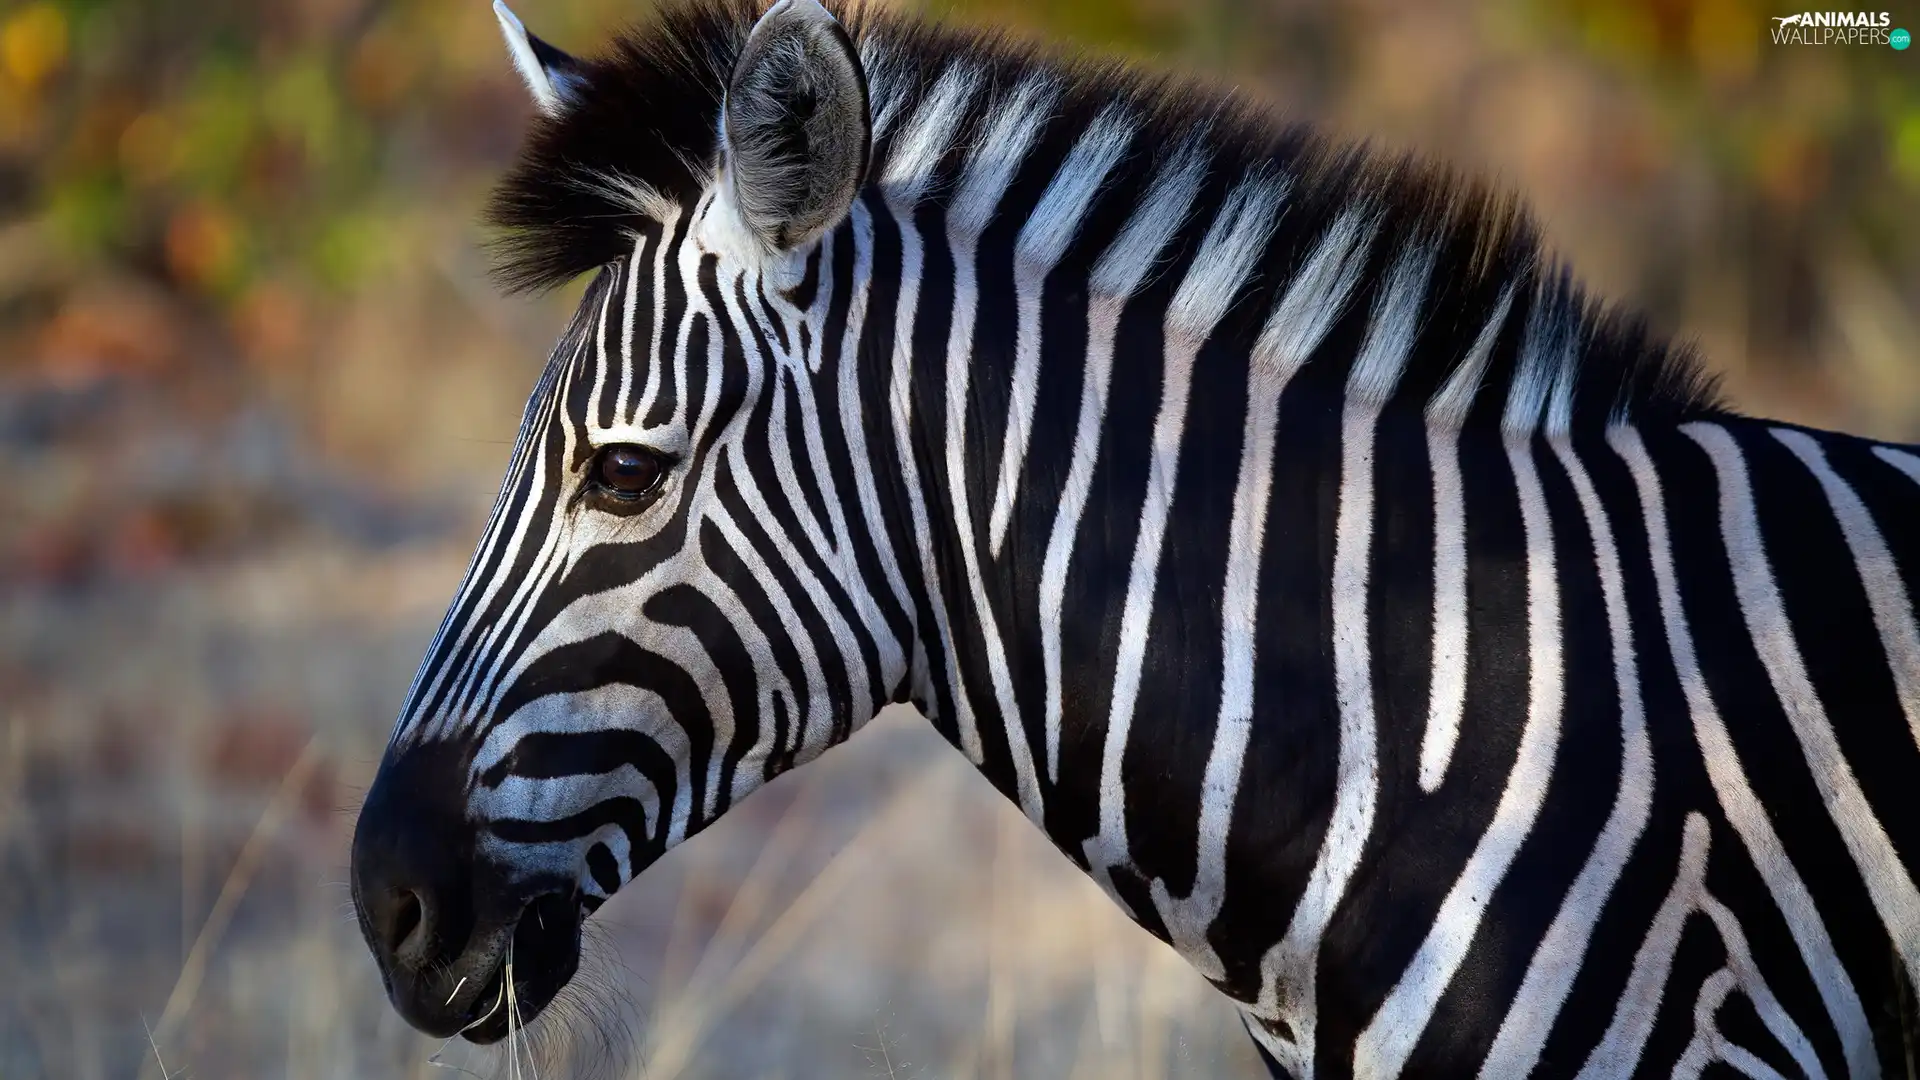 Zebra, profile